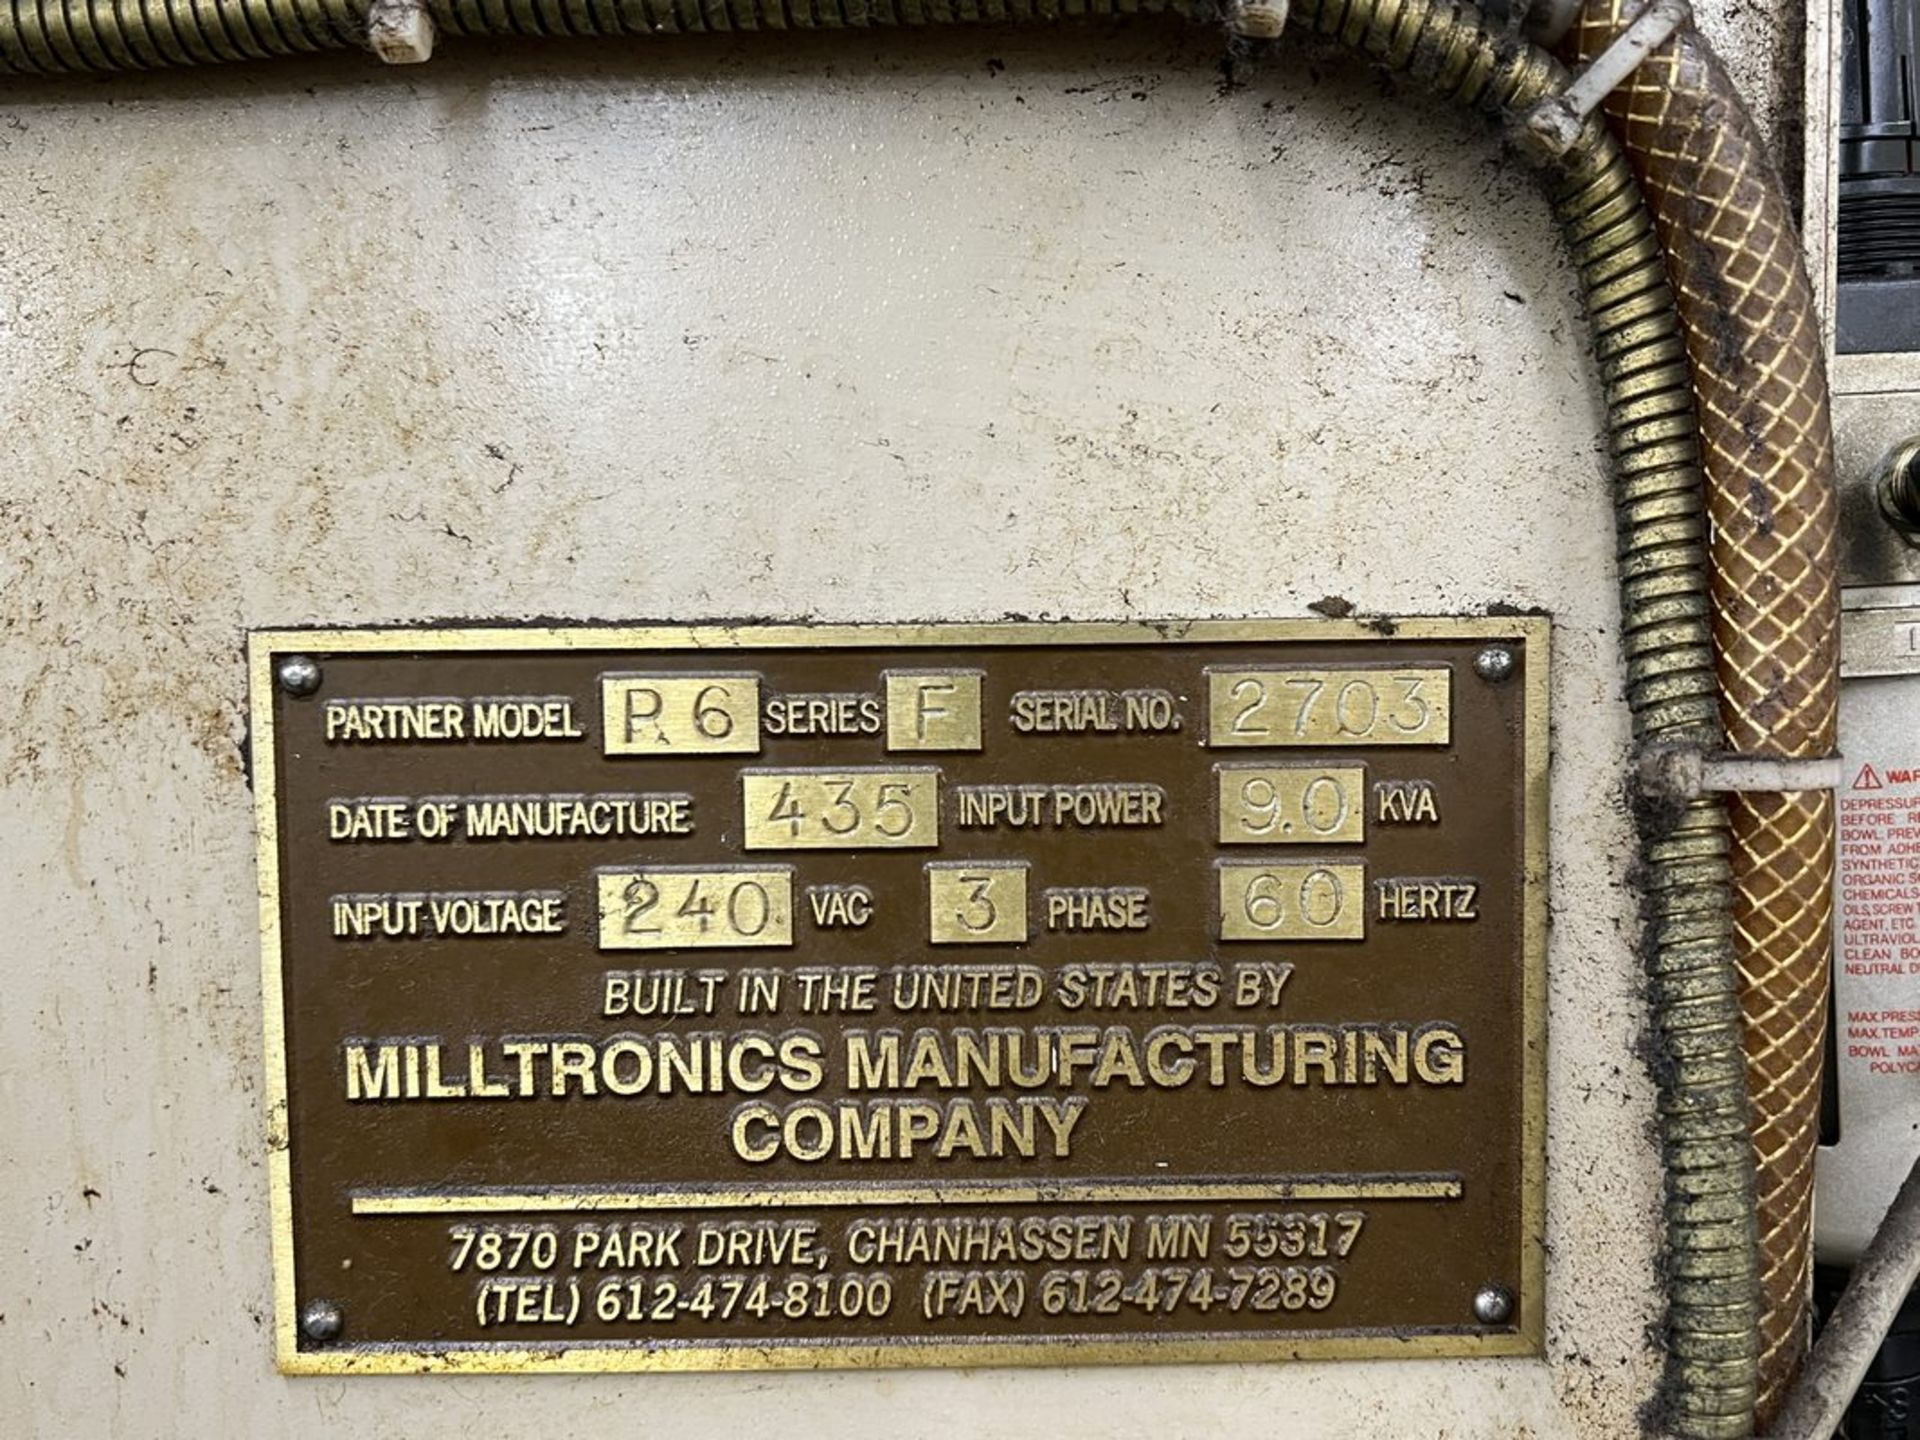 Milltronics Partner R6 CNC Vertical Machining Center, S/N 2703 - Image 7 of 7